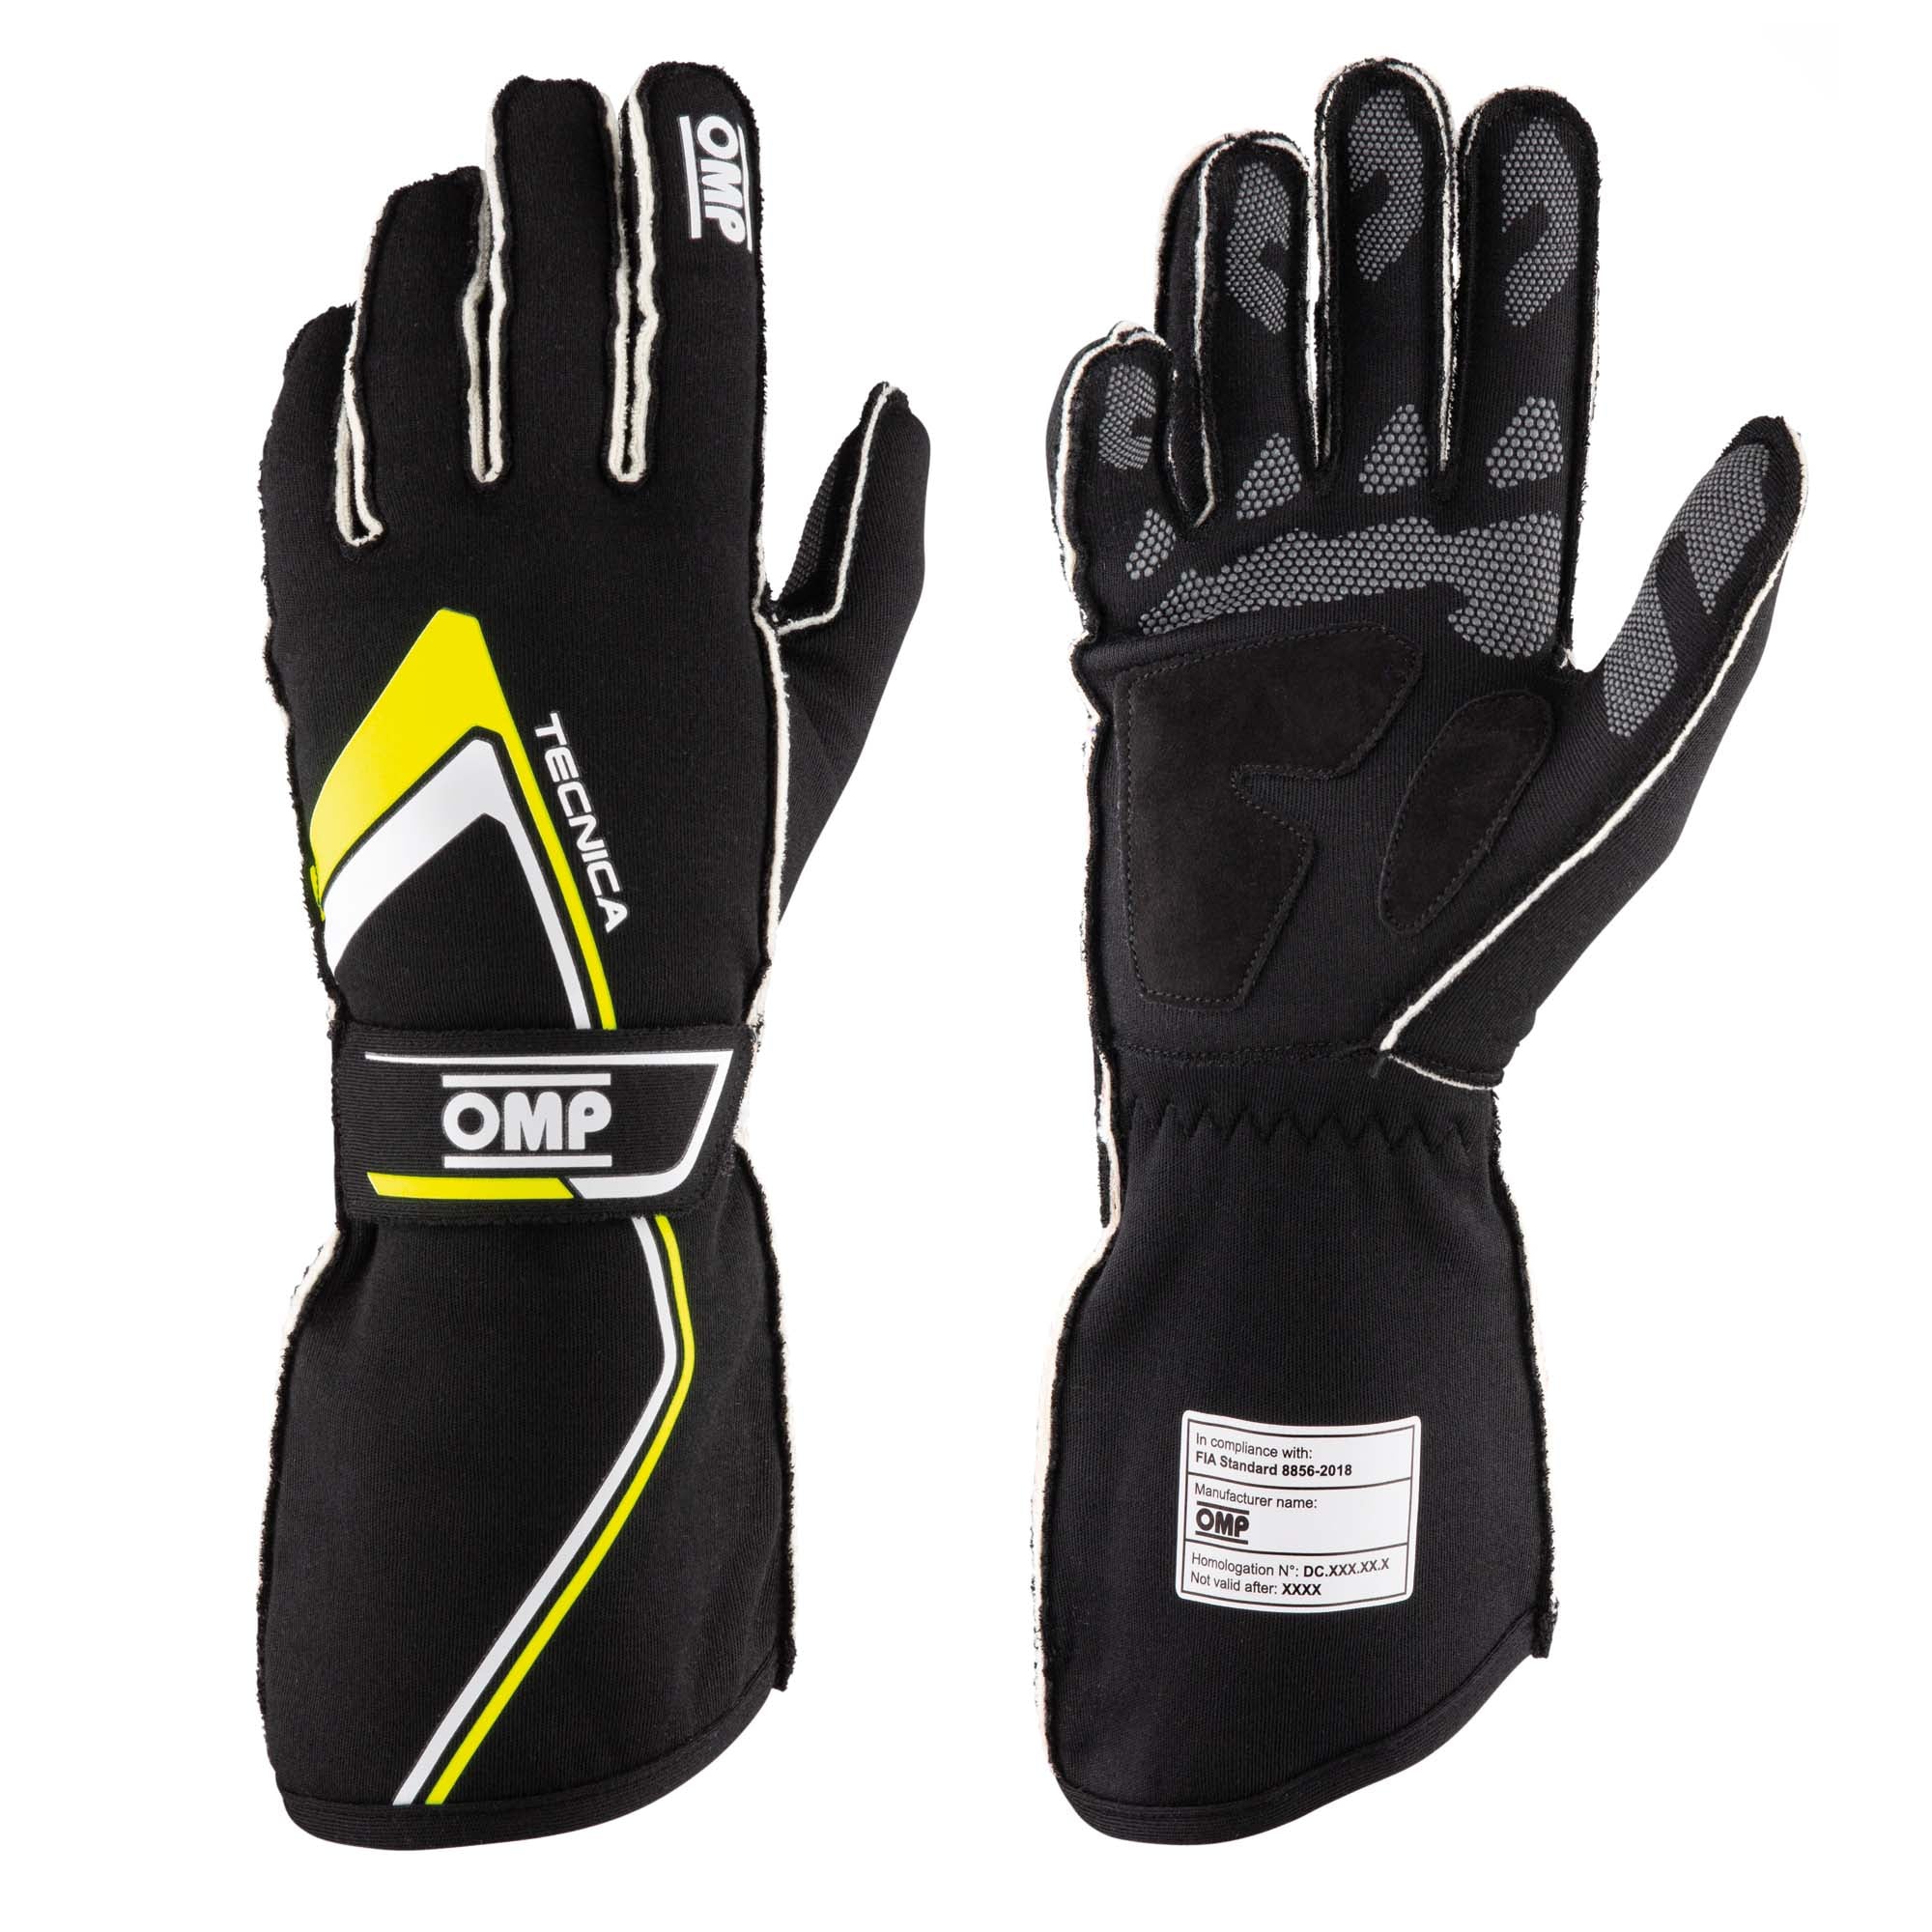 OMP Tecnica Racing Gloves